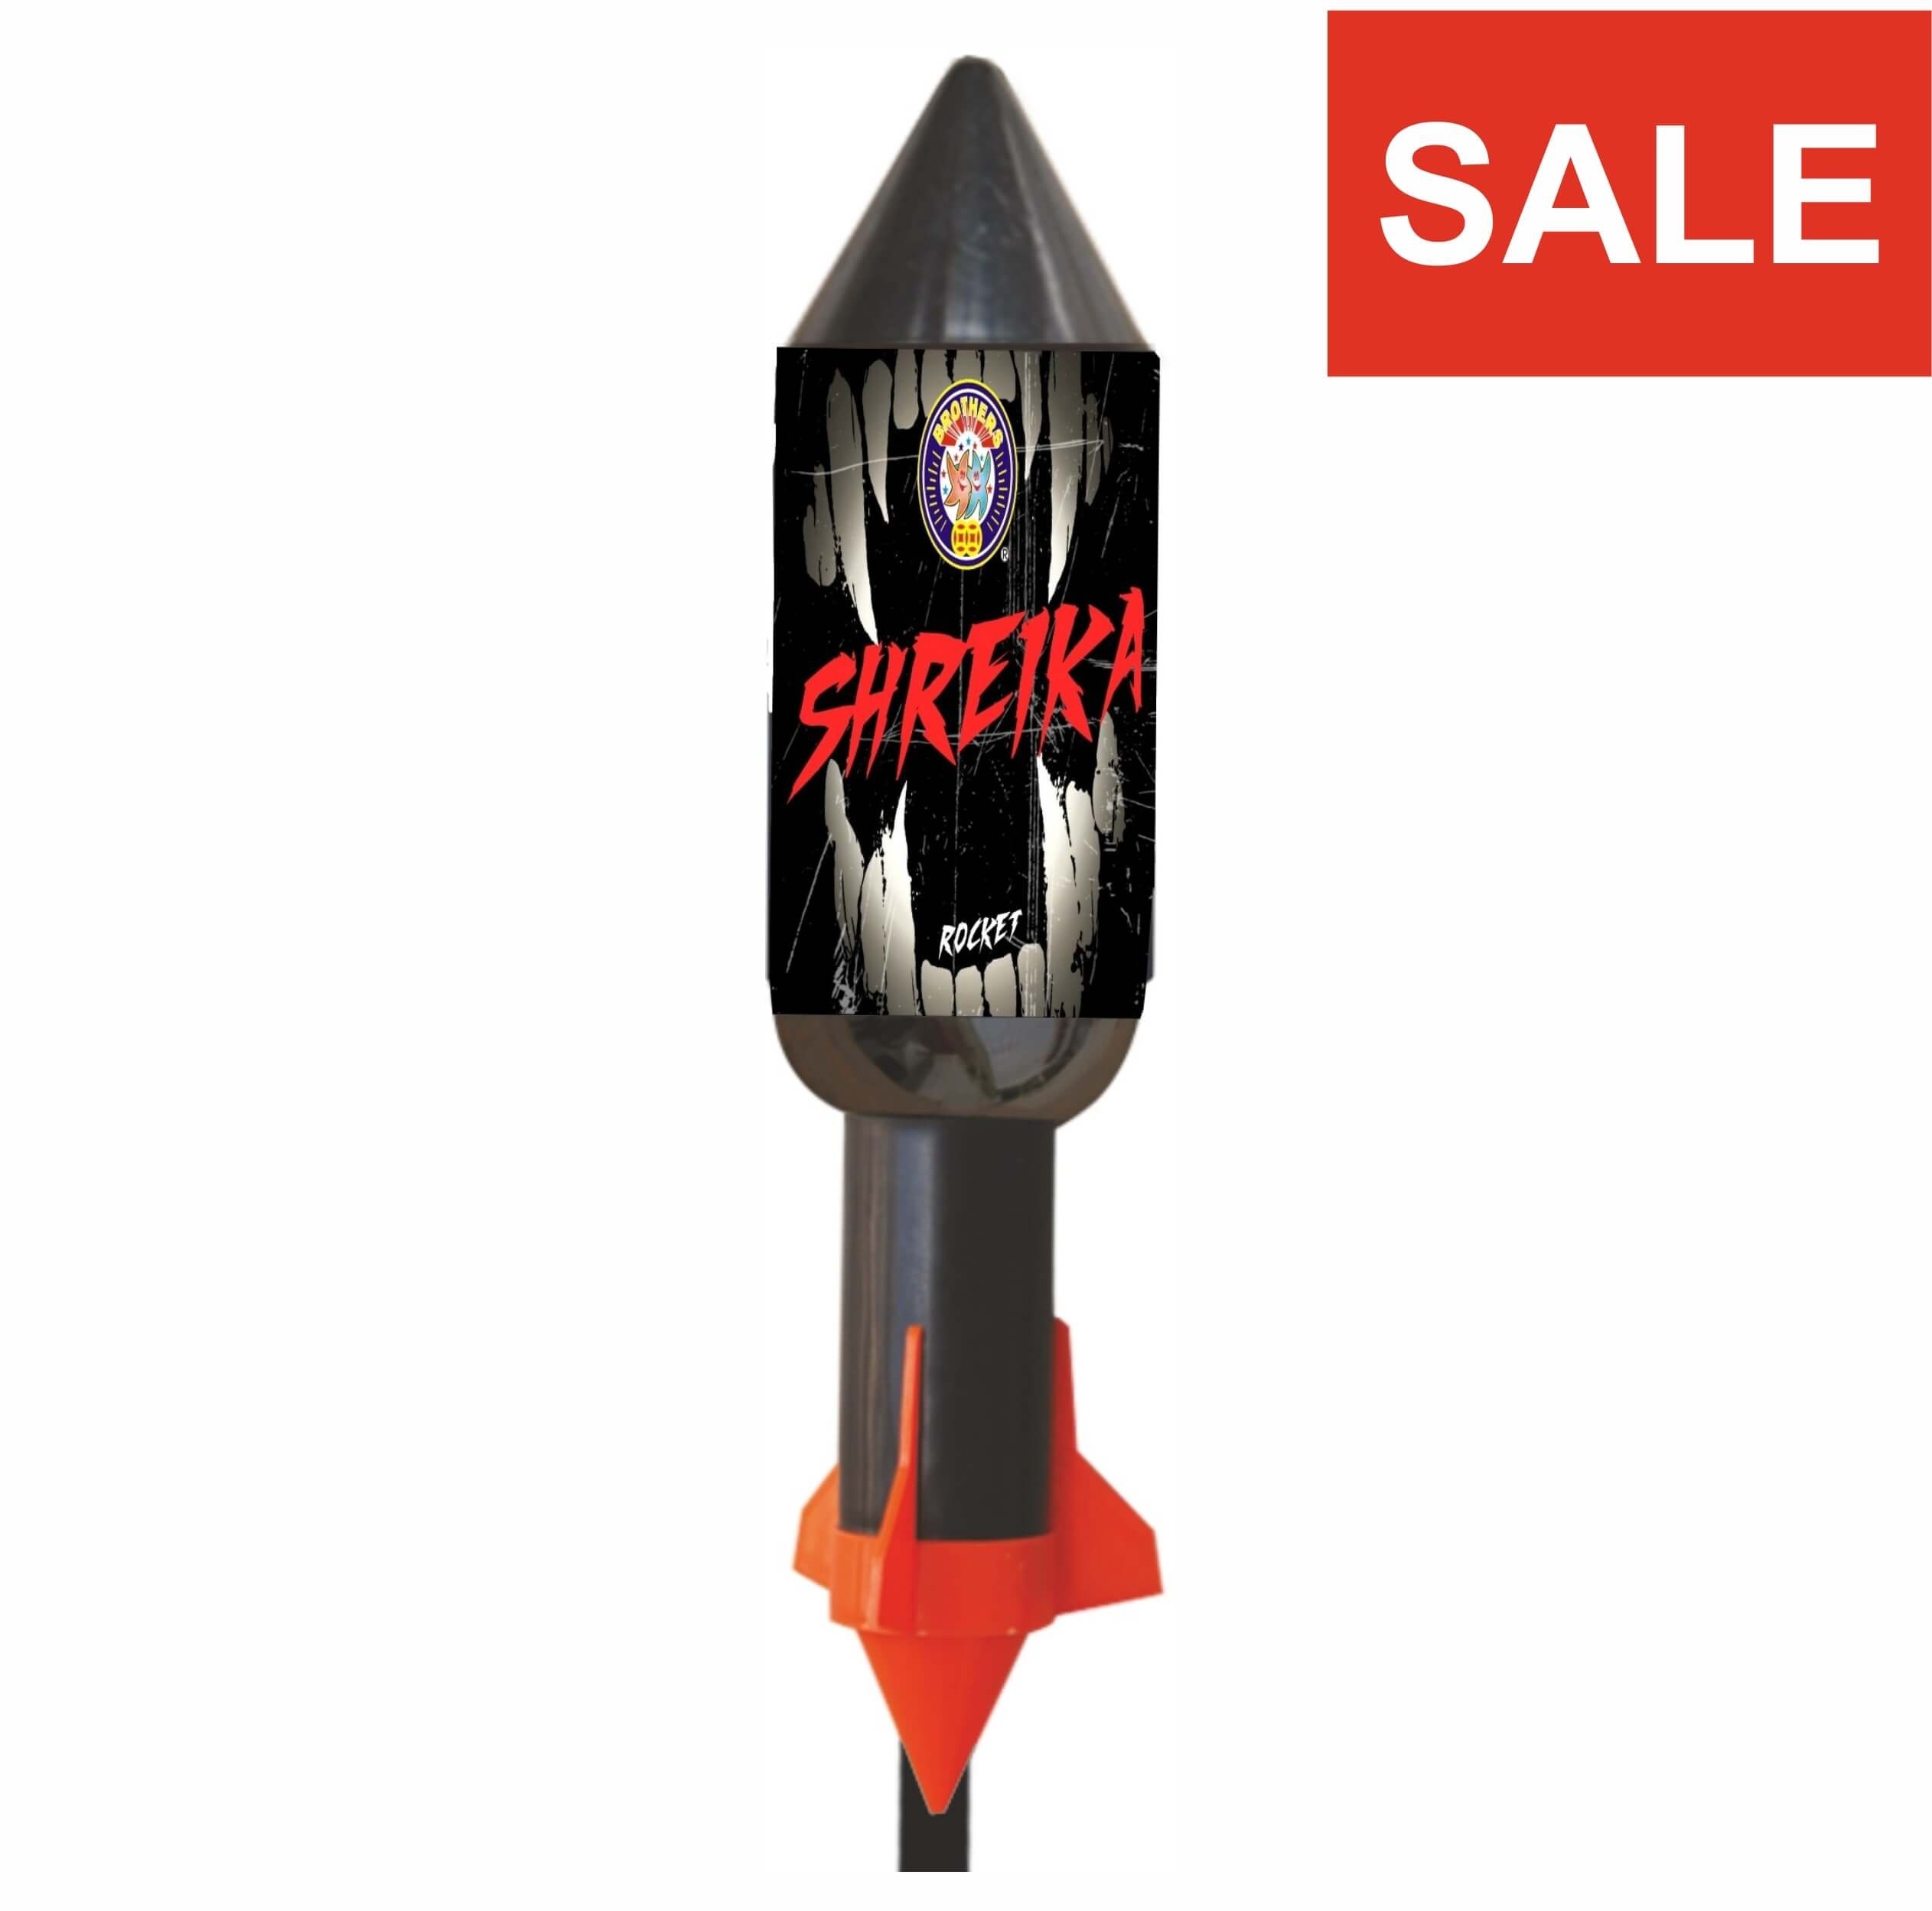 Shreika Rocket by Brothers Pyrotechnics available at Fireworks Kingdom